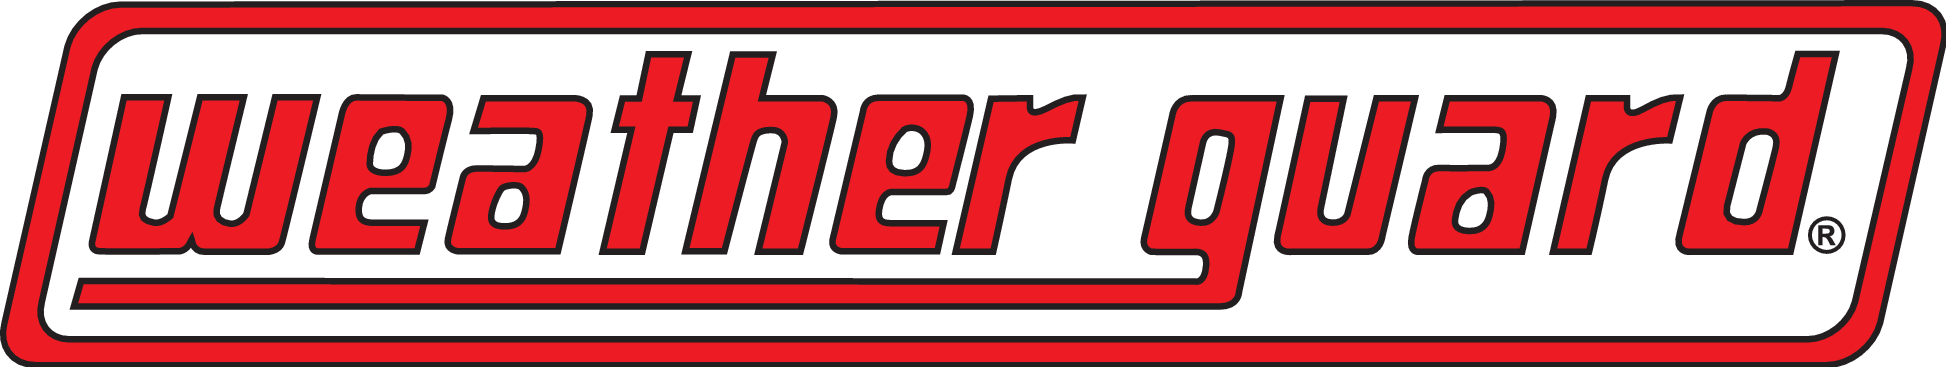 Logo-WeatherGuard